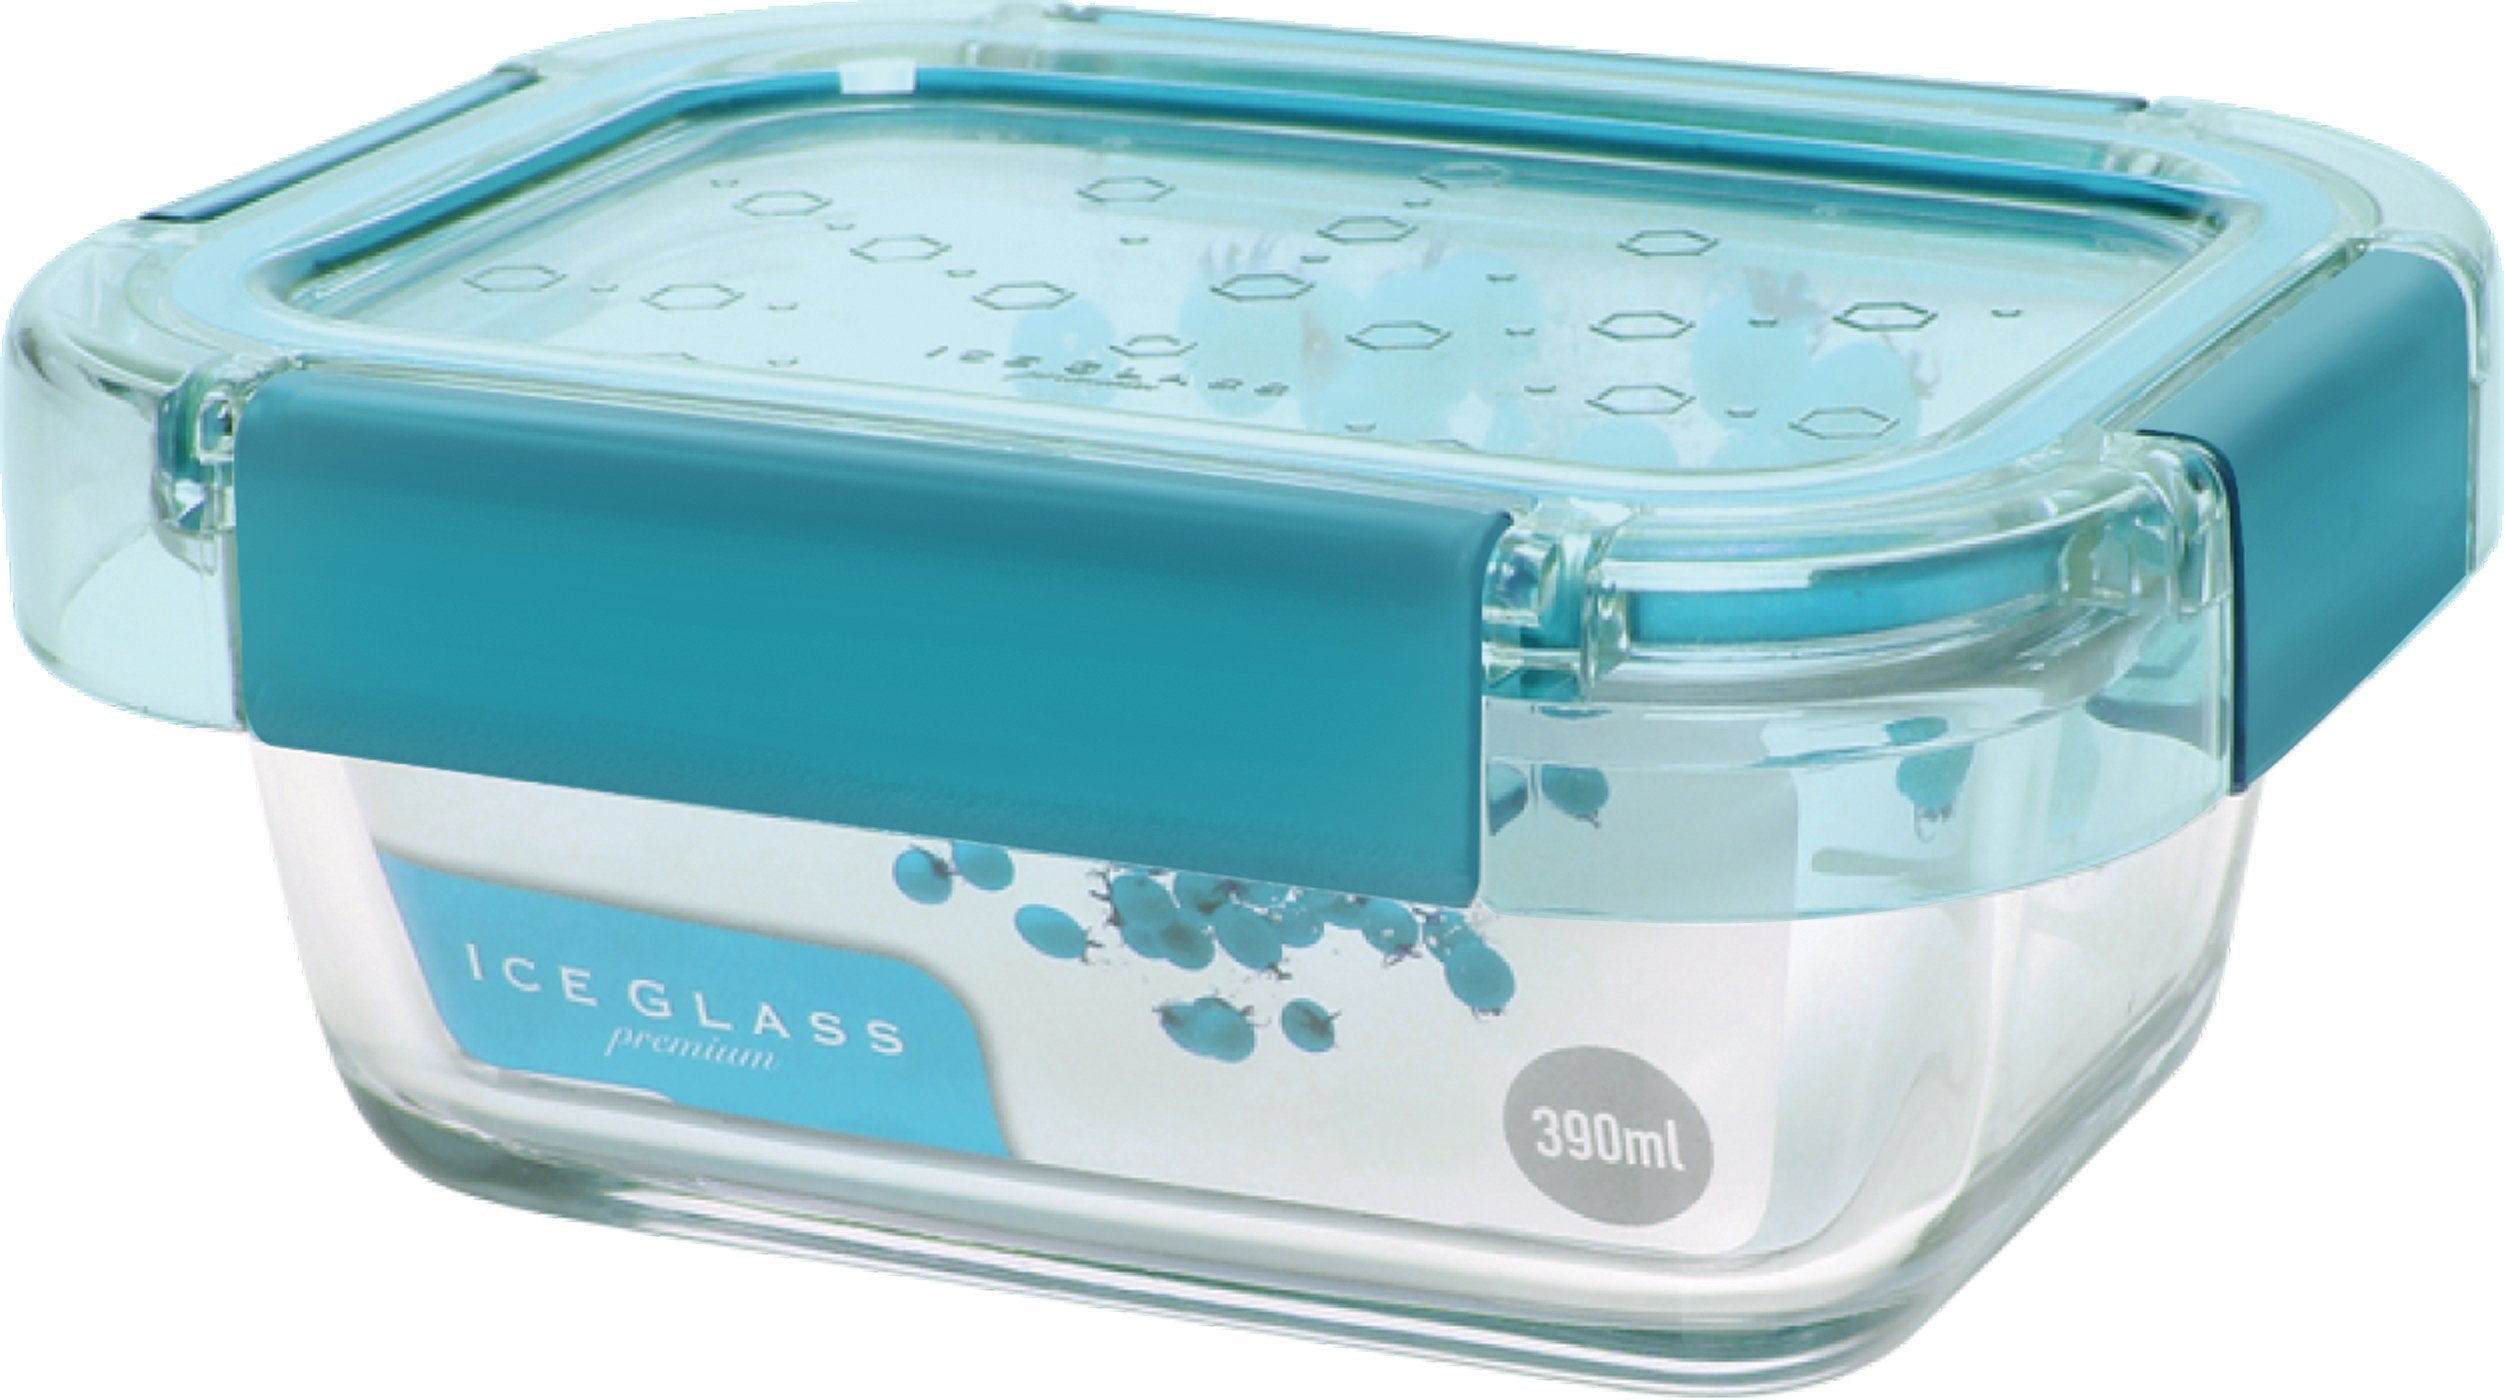 Komax Ice Glass Premium Rectangular Food Storage Container, 385 ml (Mint)